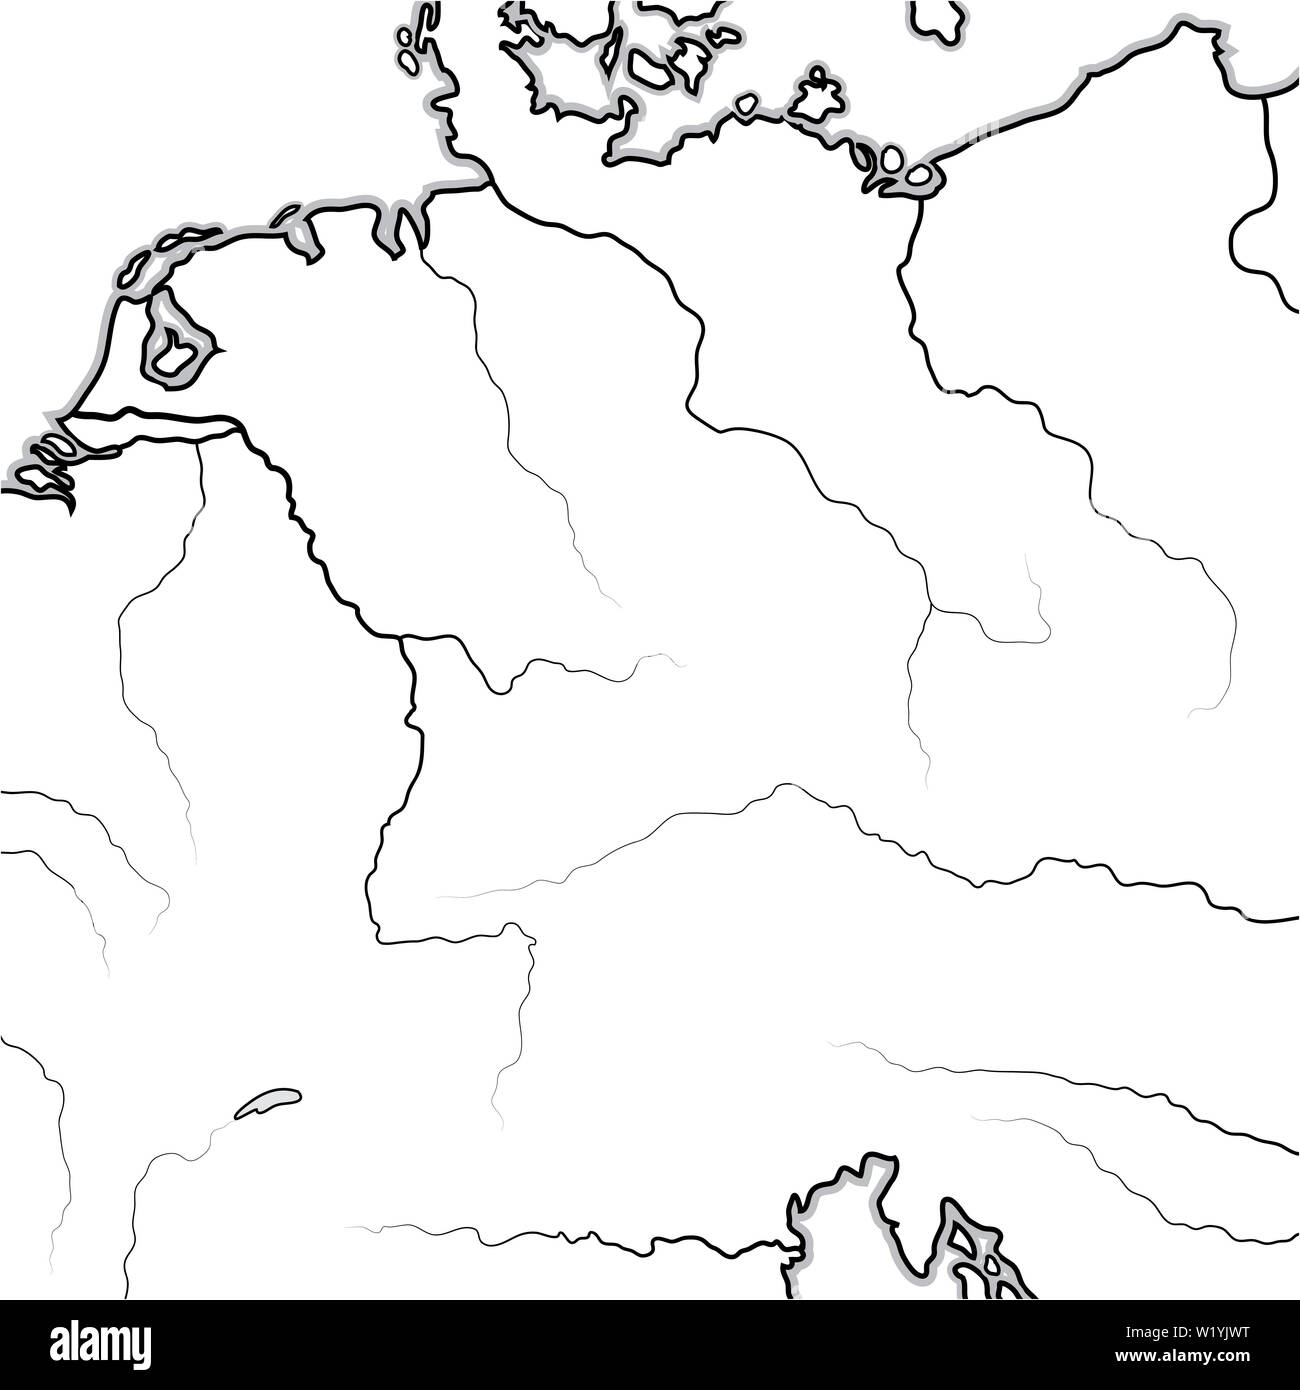 Mapa de las tierras alemanas: Alemania (Deutschland), Alemannia (Allemagne), Franconia, Baviera, Sajonia, Turingia, Westfalia, Teutonia, Prusia, Austria. Foto de stock